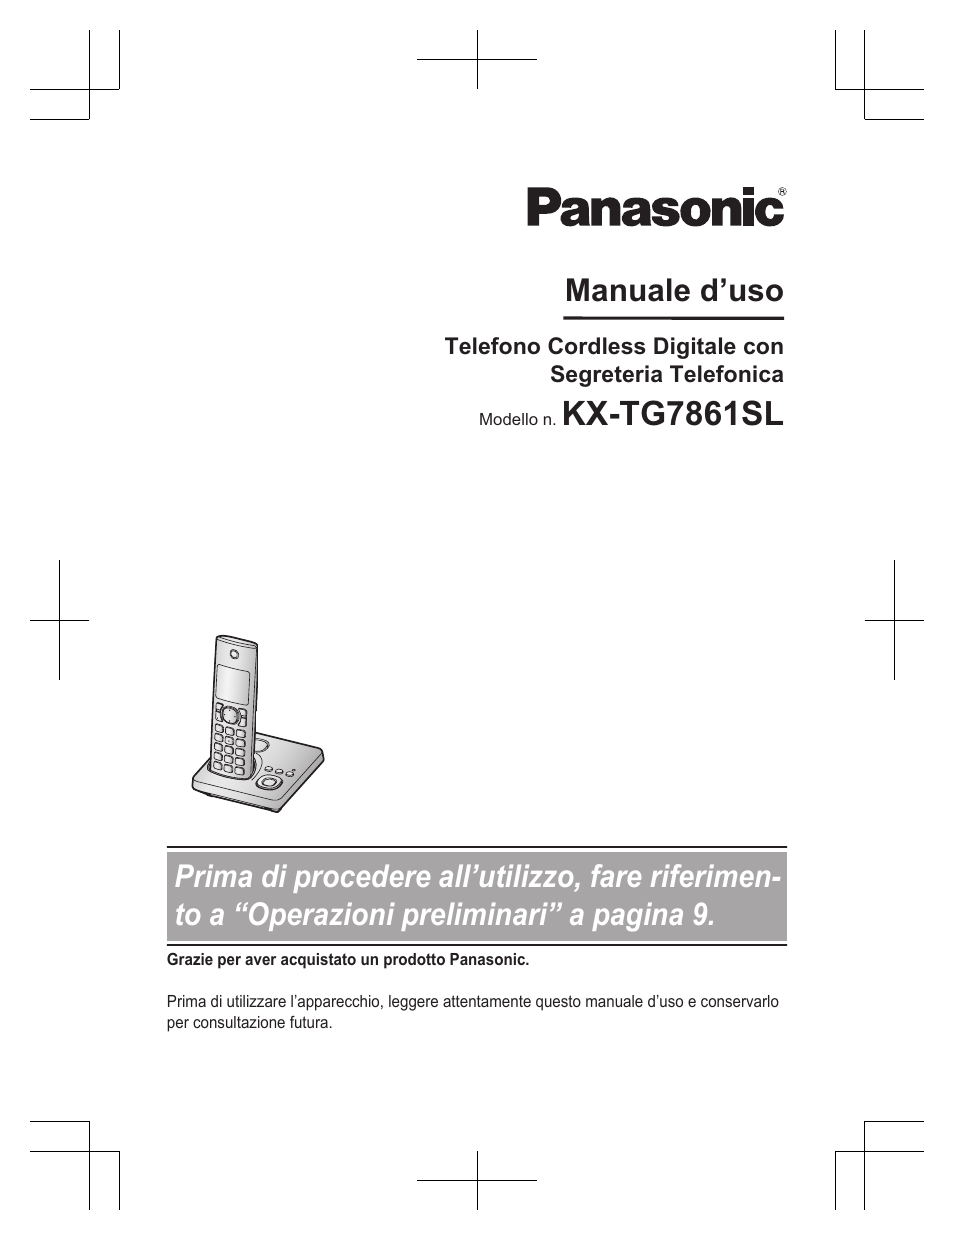 Panasonic KXTG7861SL Manuale d'uso | Pagine: 52